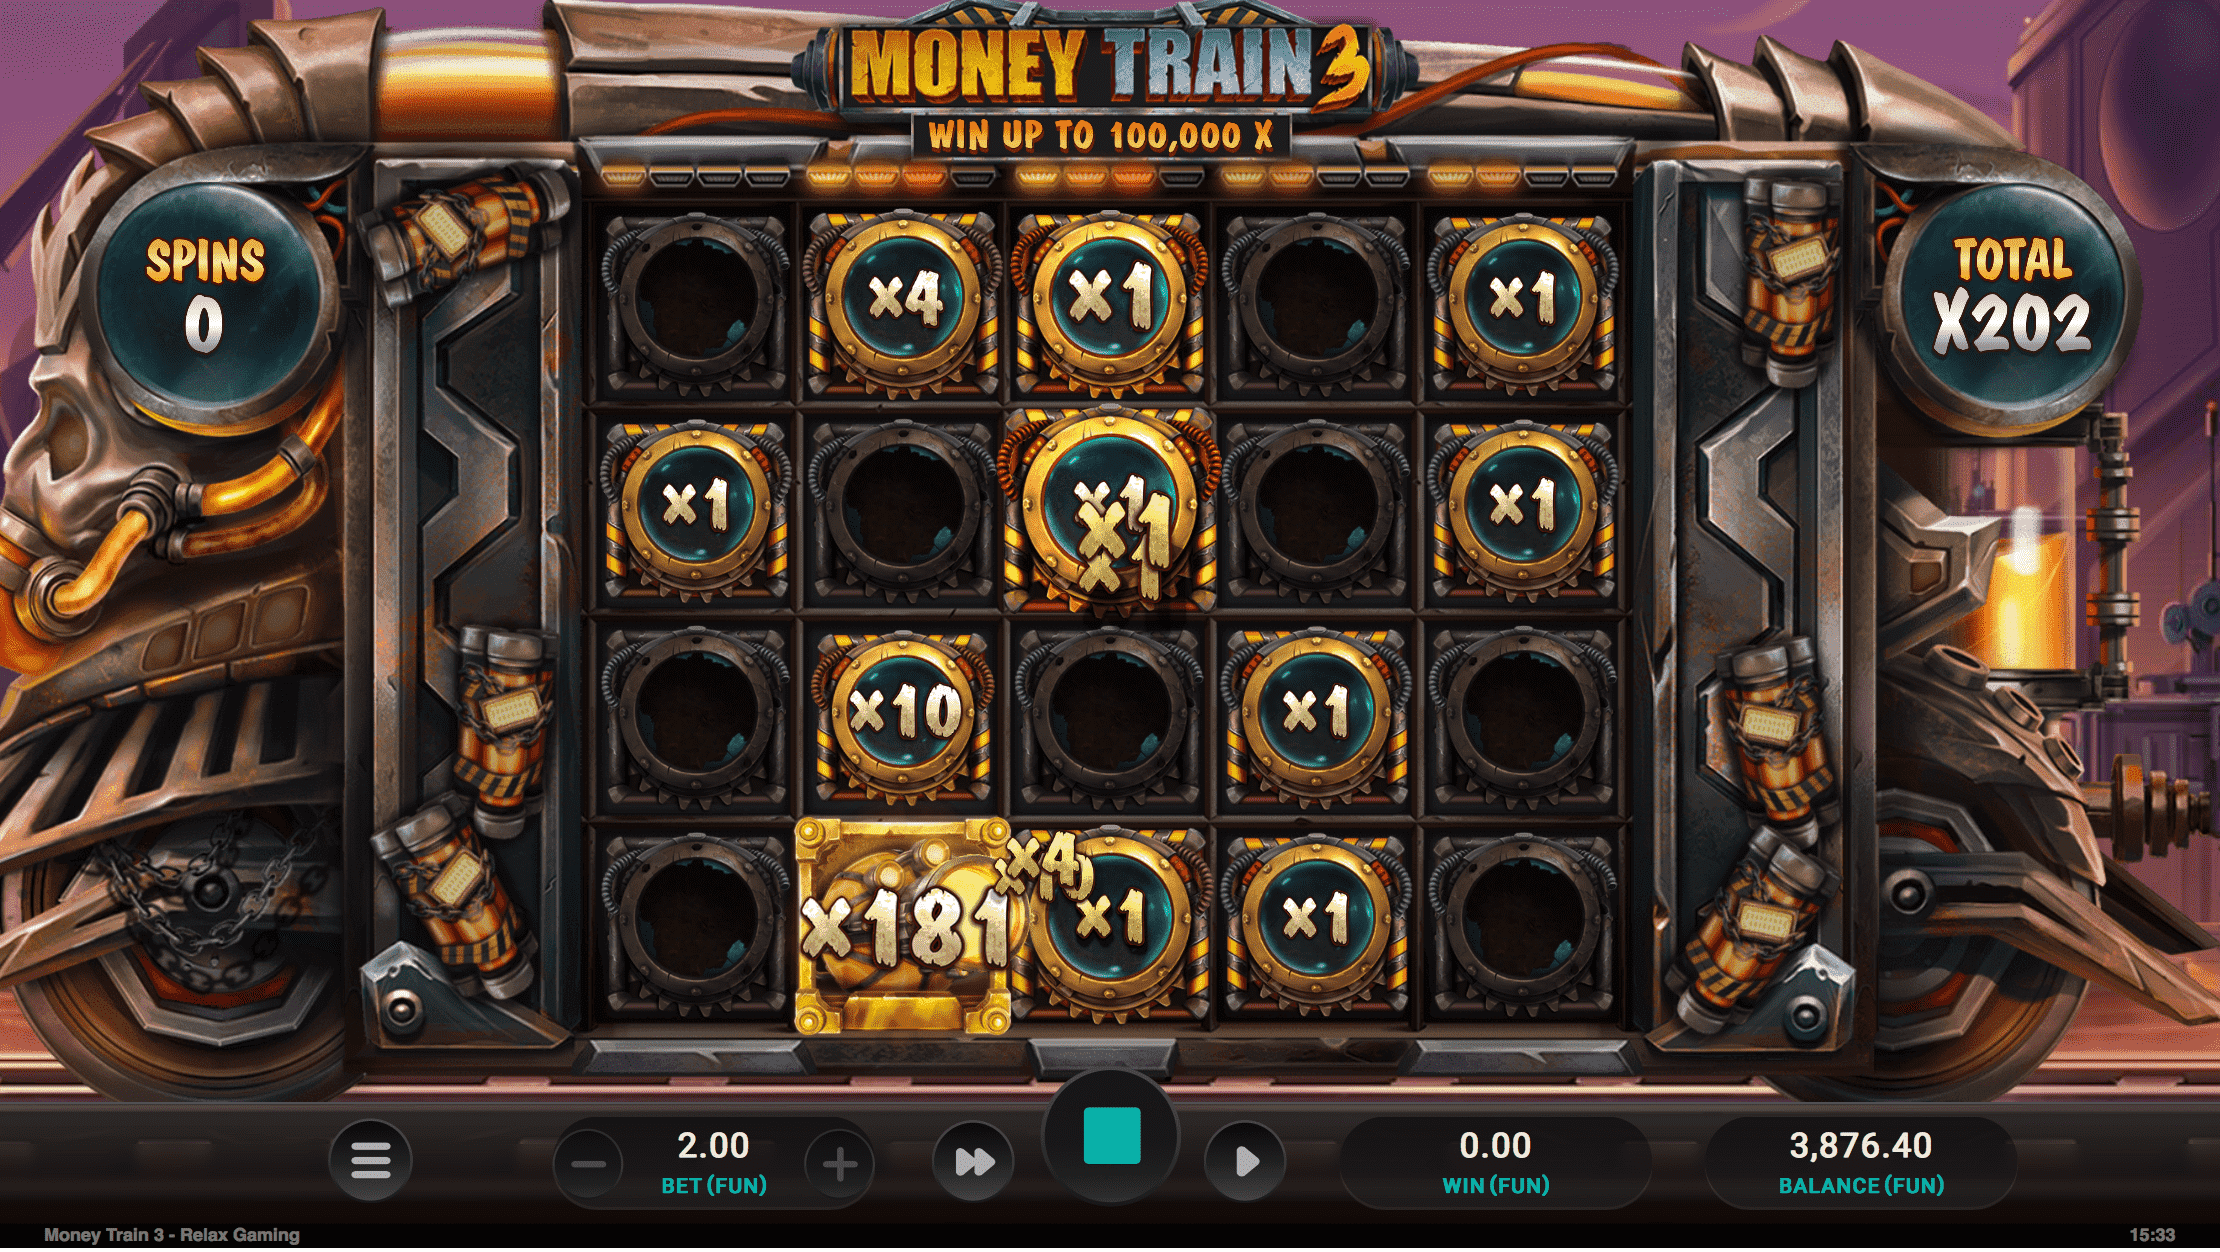 Money Train 3 bonus round multiplier